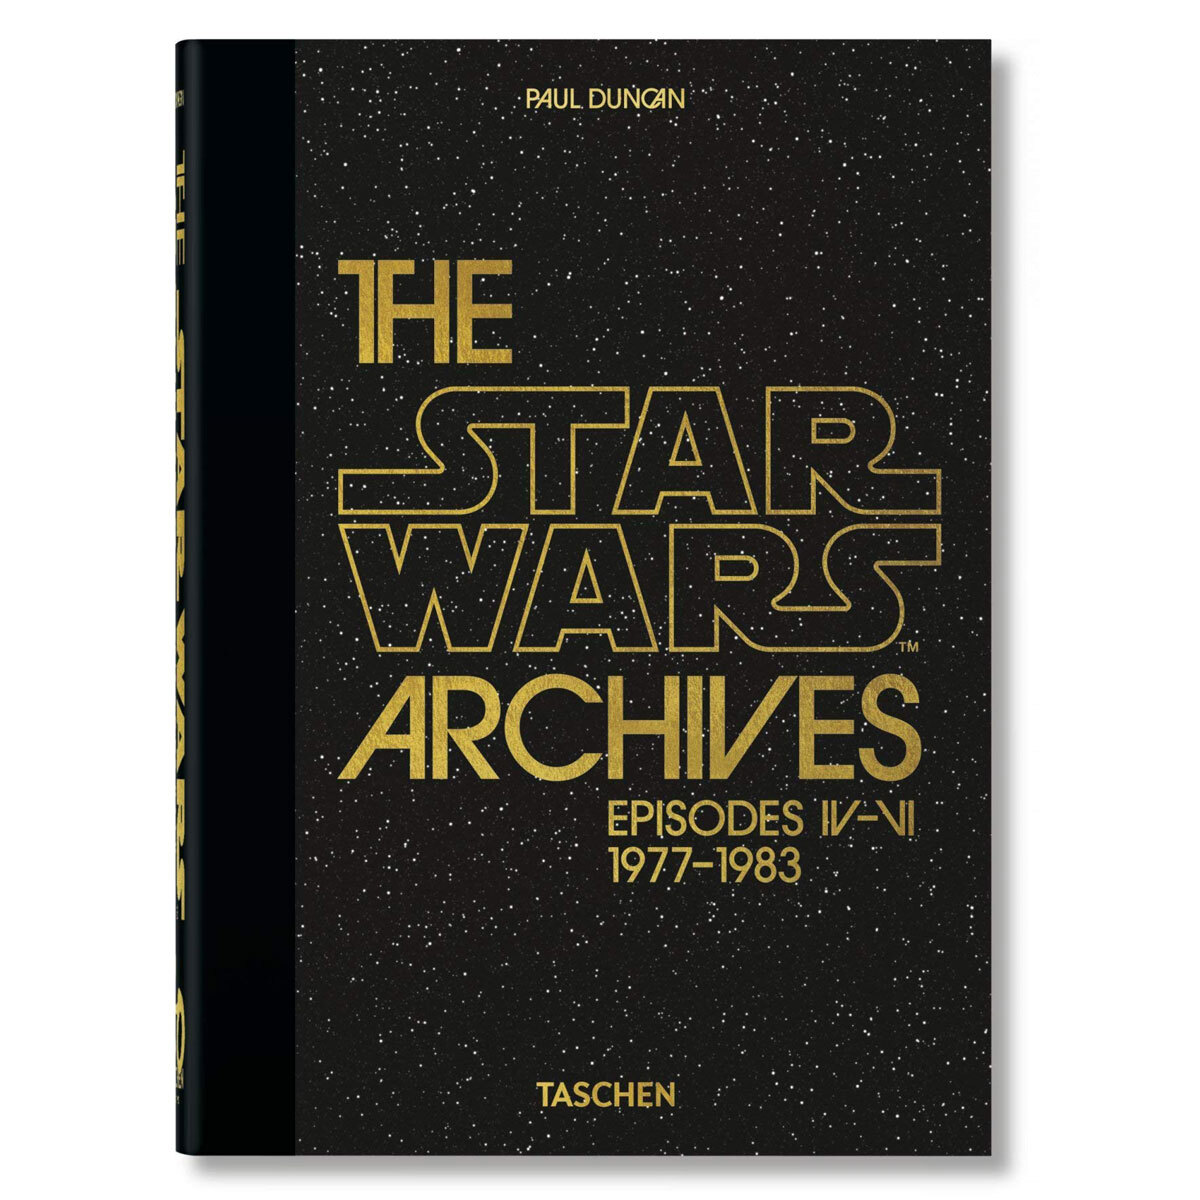 The Walt Disney or Star Wars Film Archives